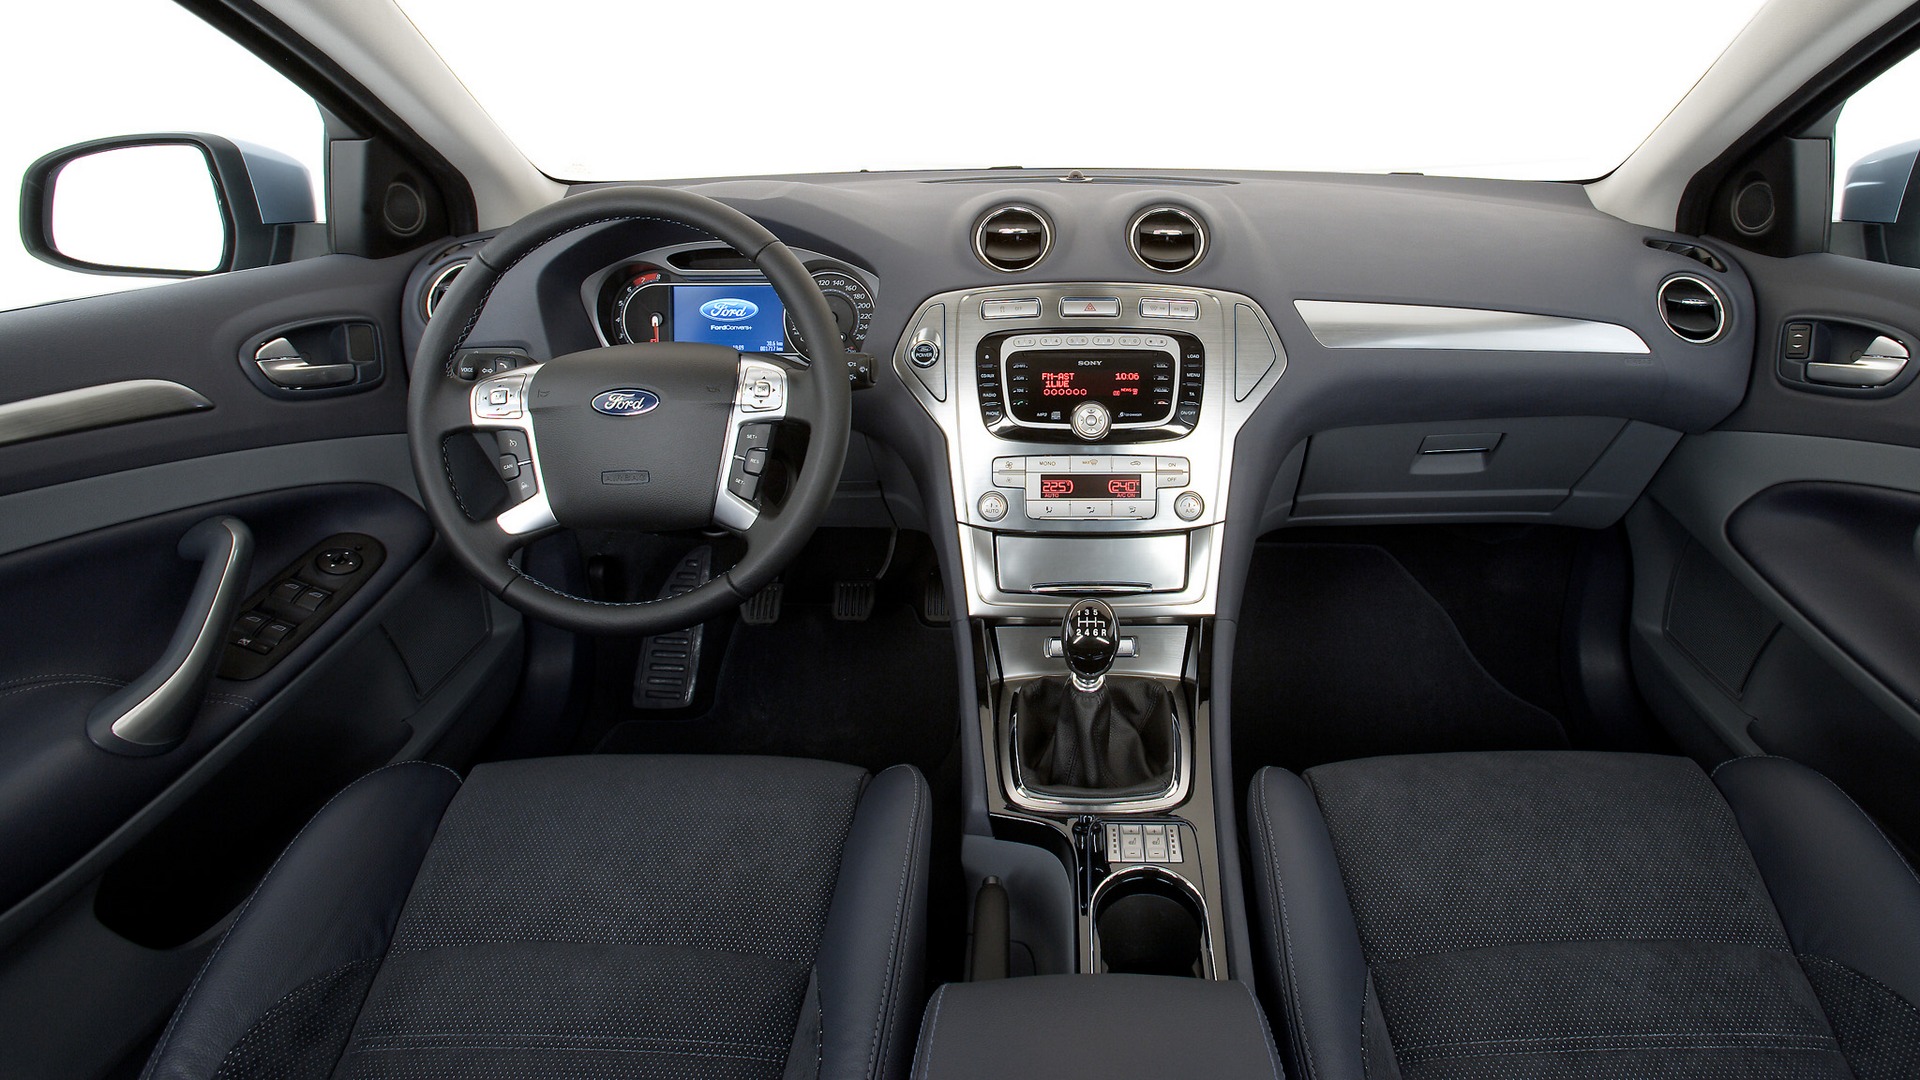 Ford Mondeo Mk4 wnętrze (20072010) Autofakty.pl (fot